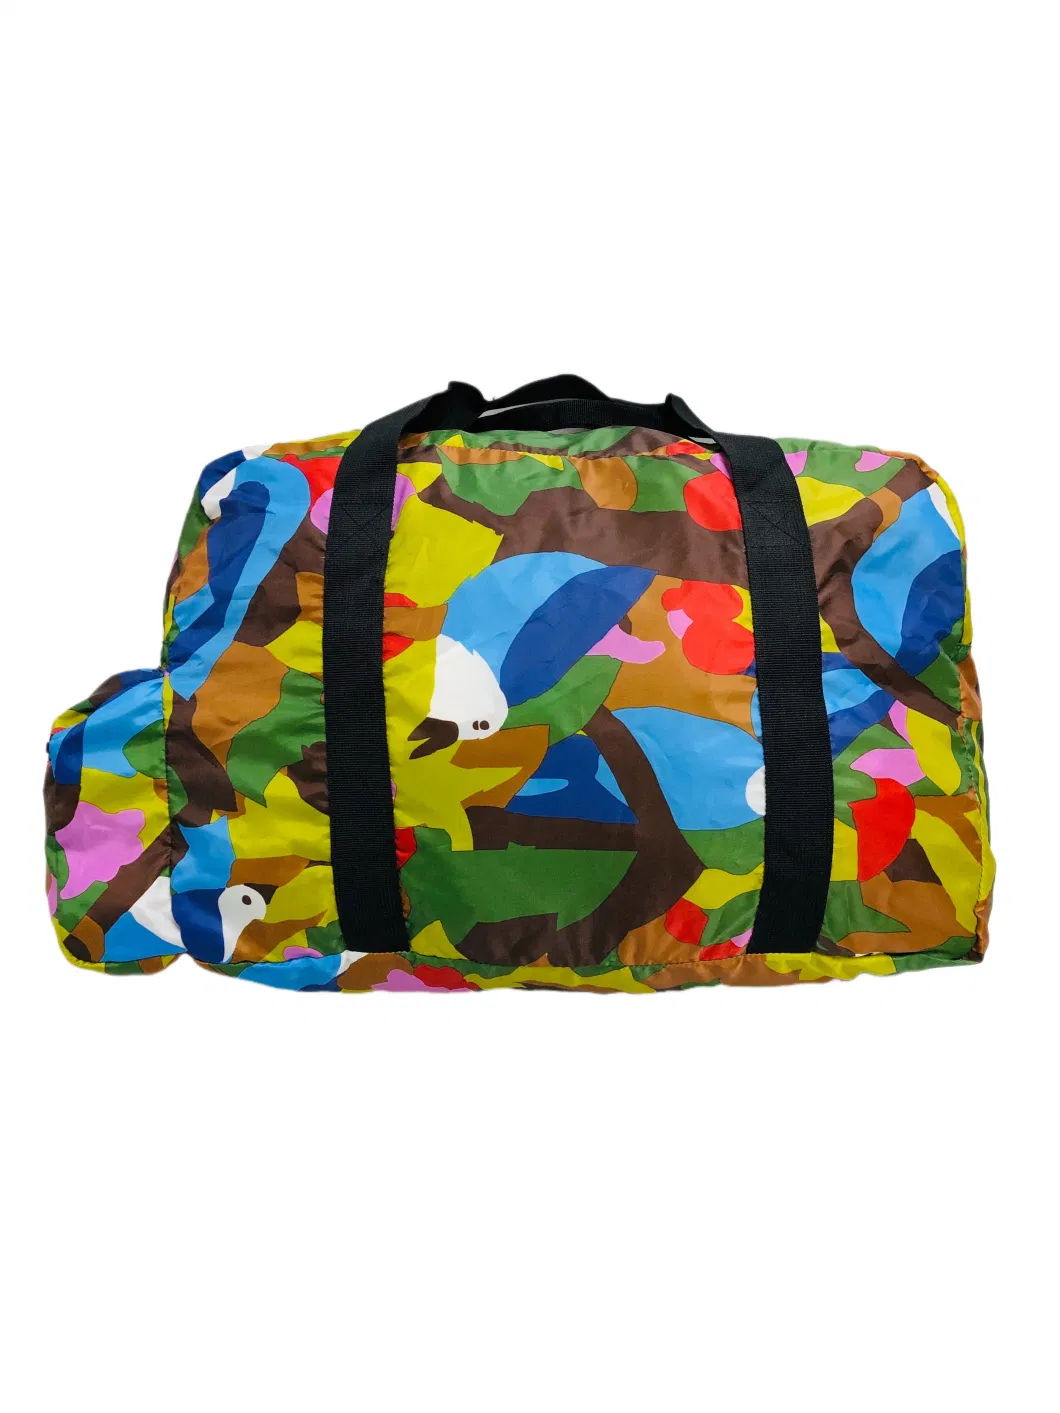 Foldable Duffle Bag for Travel Gym Sports Lightweight Luggage Duffel Bag